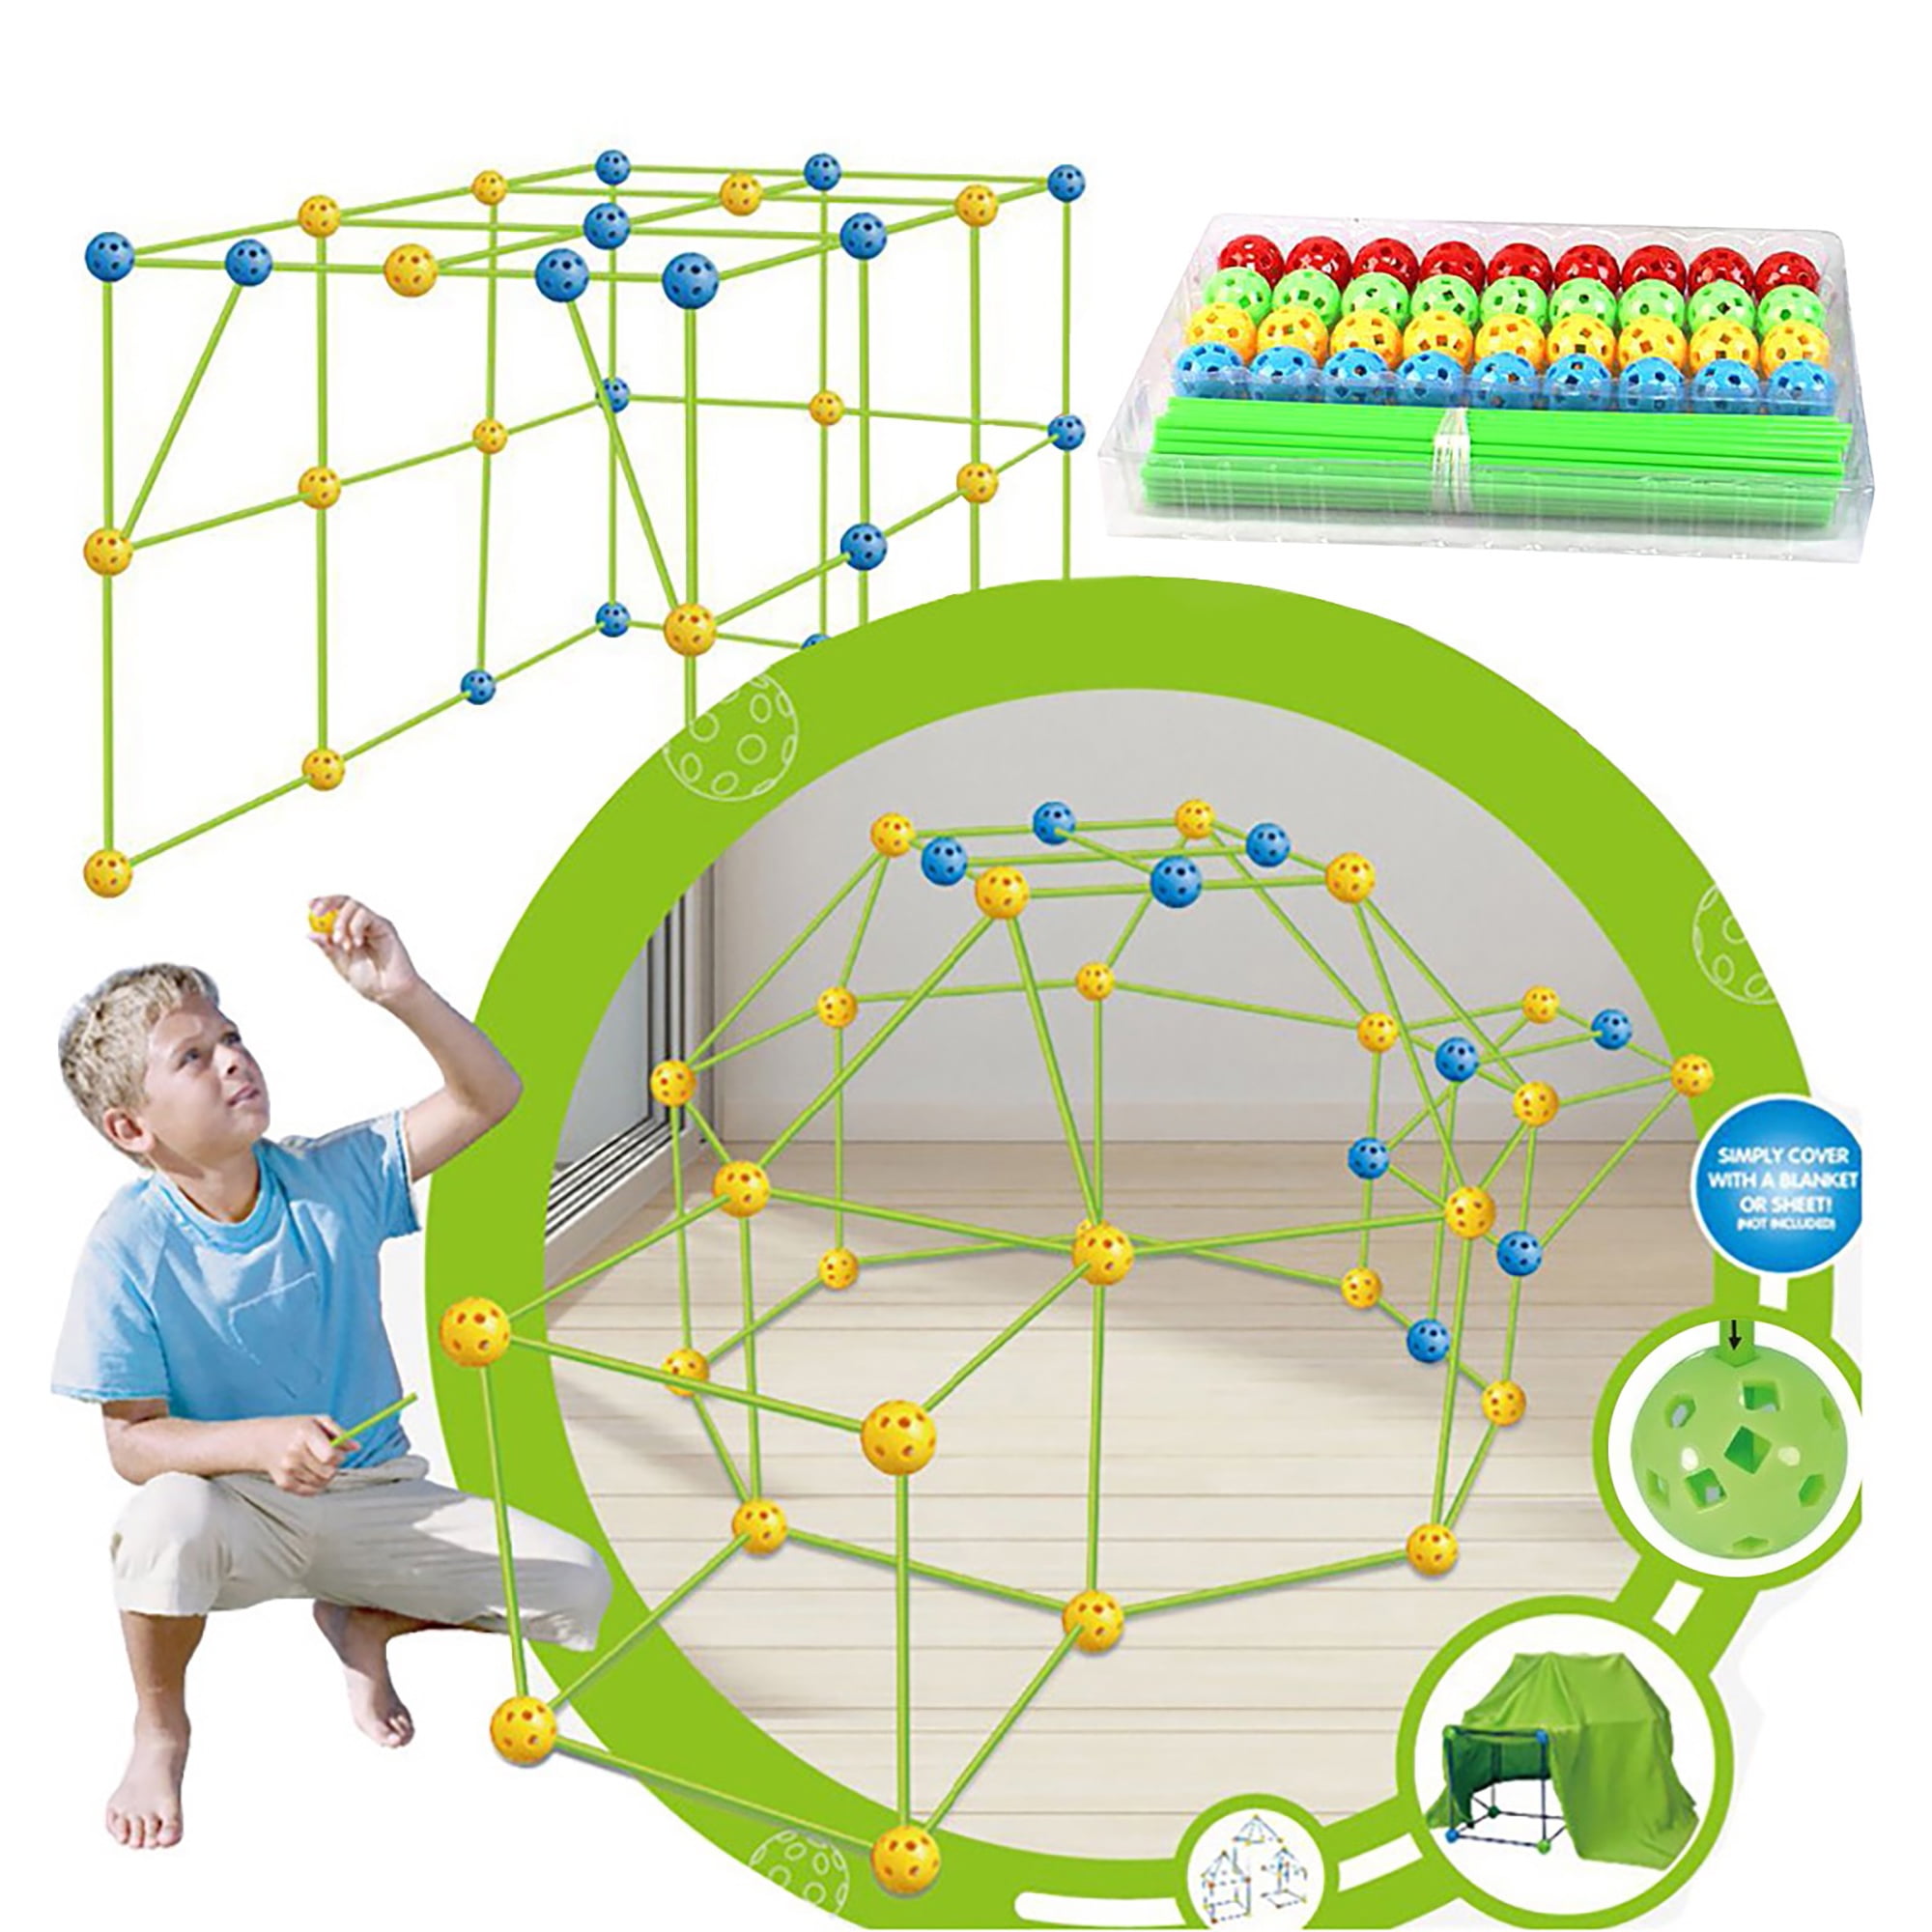 PlumoToys® 90 PCS Fort Building Kit Construction Toys for kids